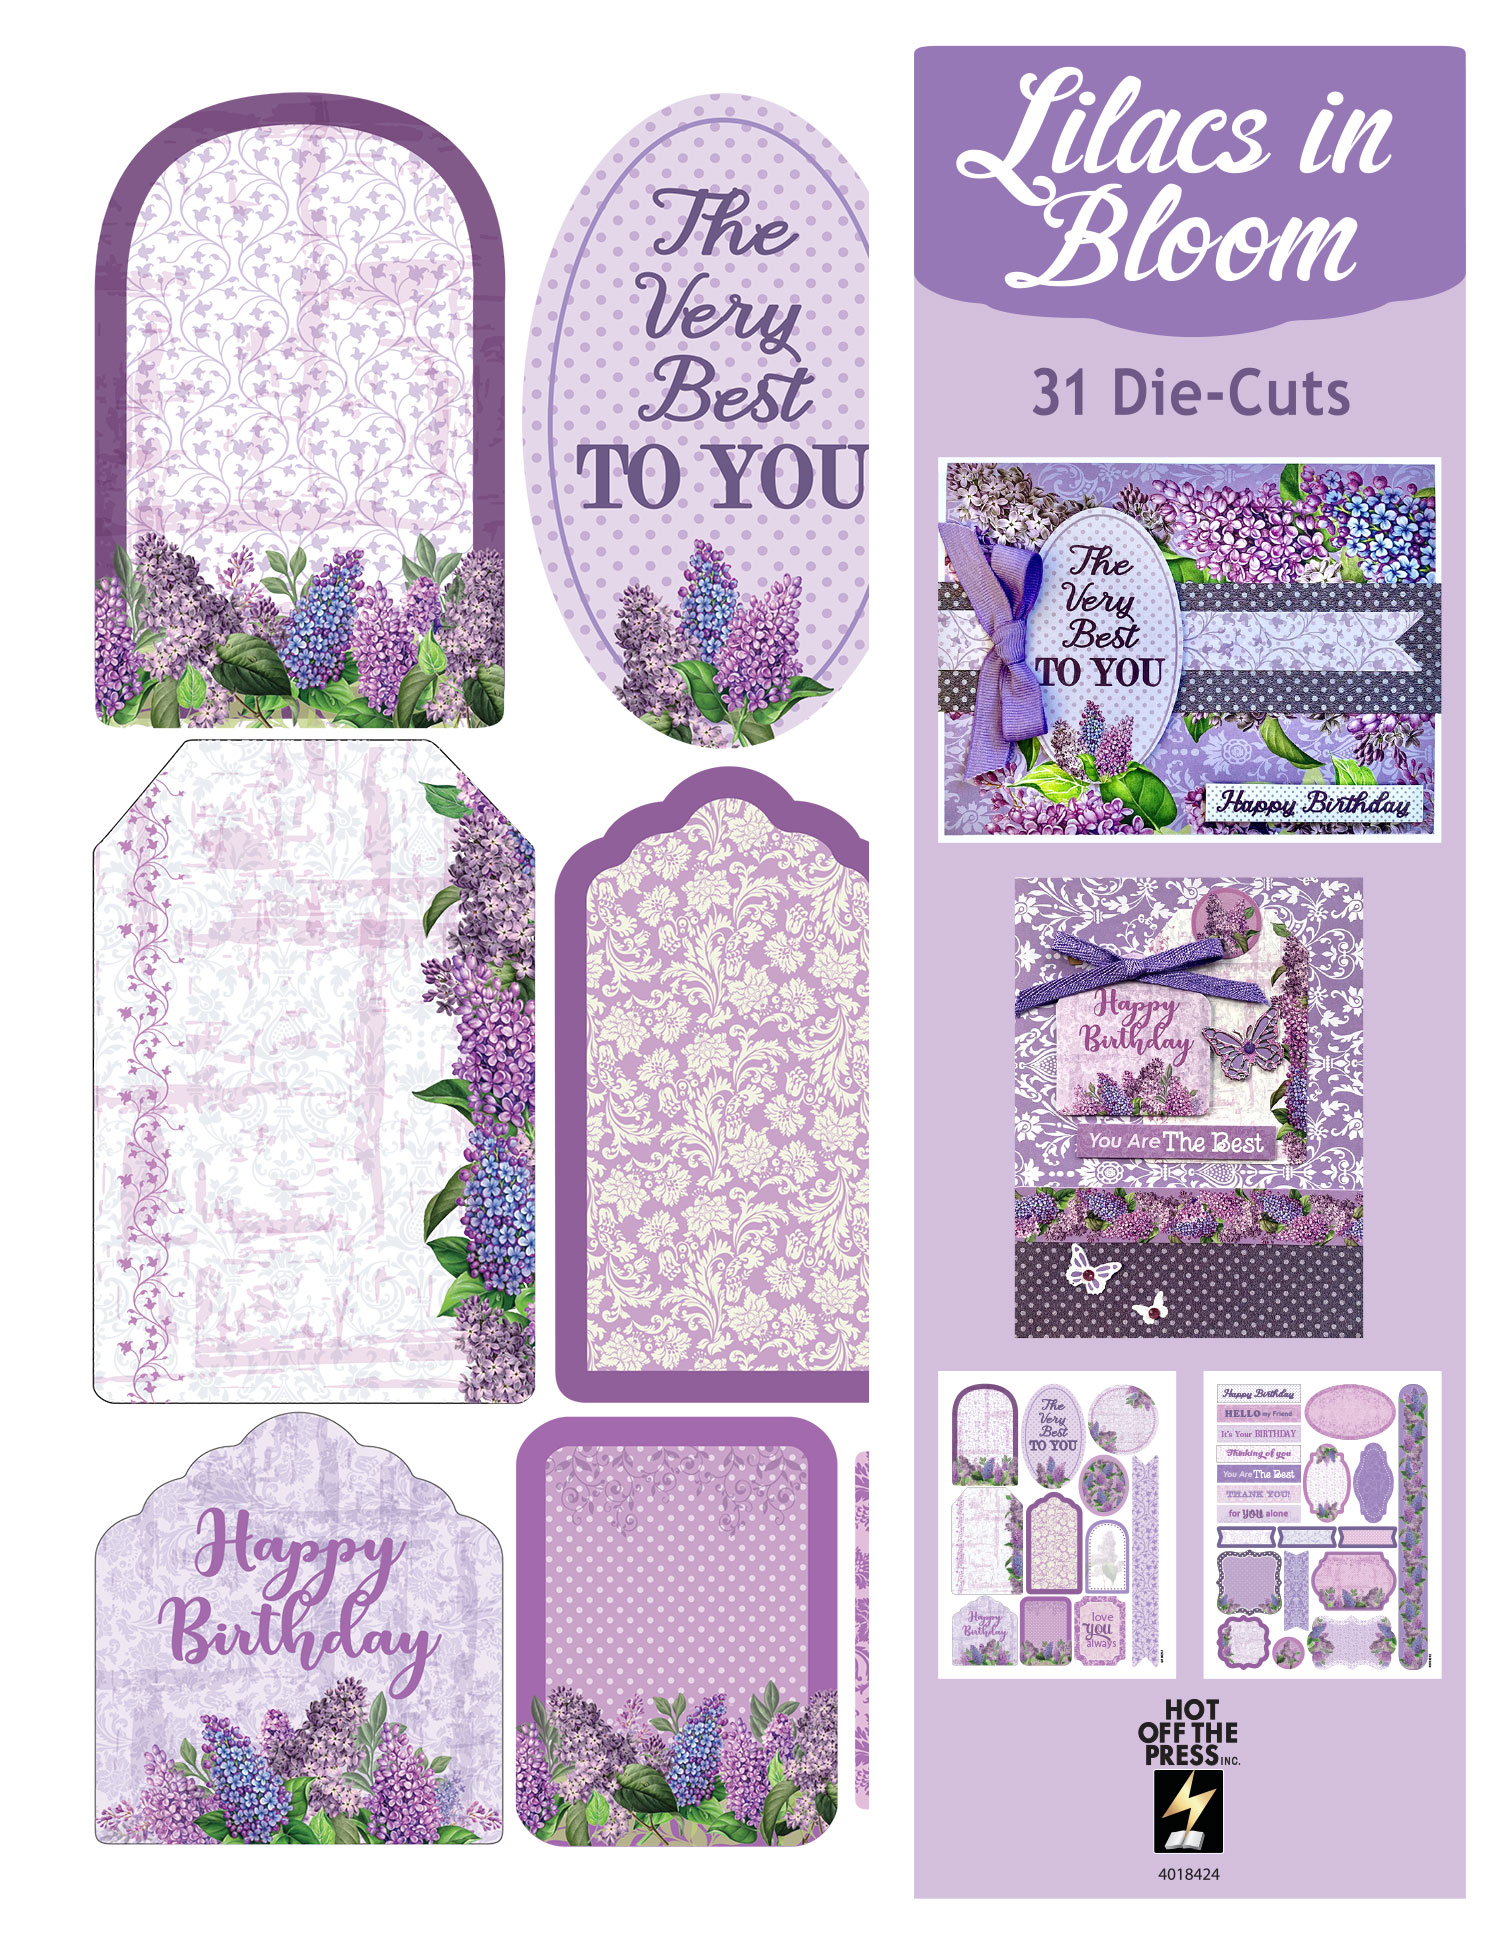 Lilacs in Bloom Die Cuts, 31 pieces